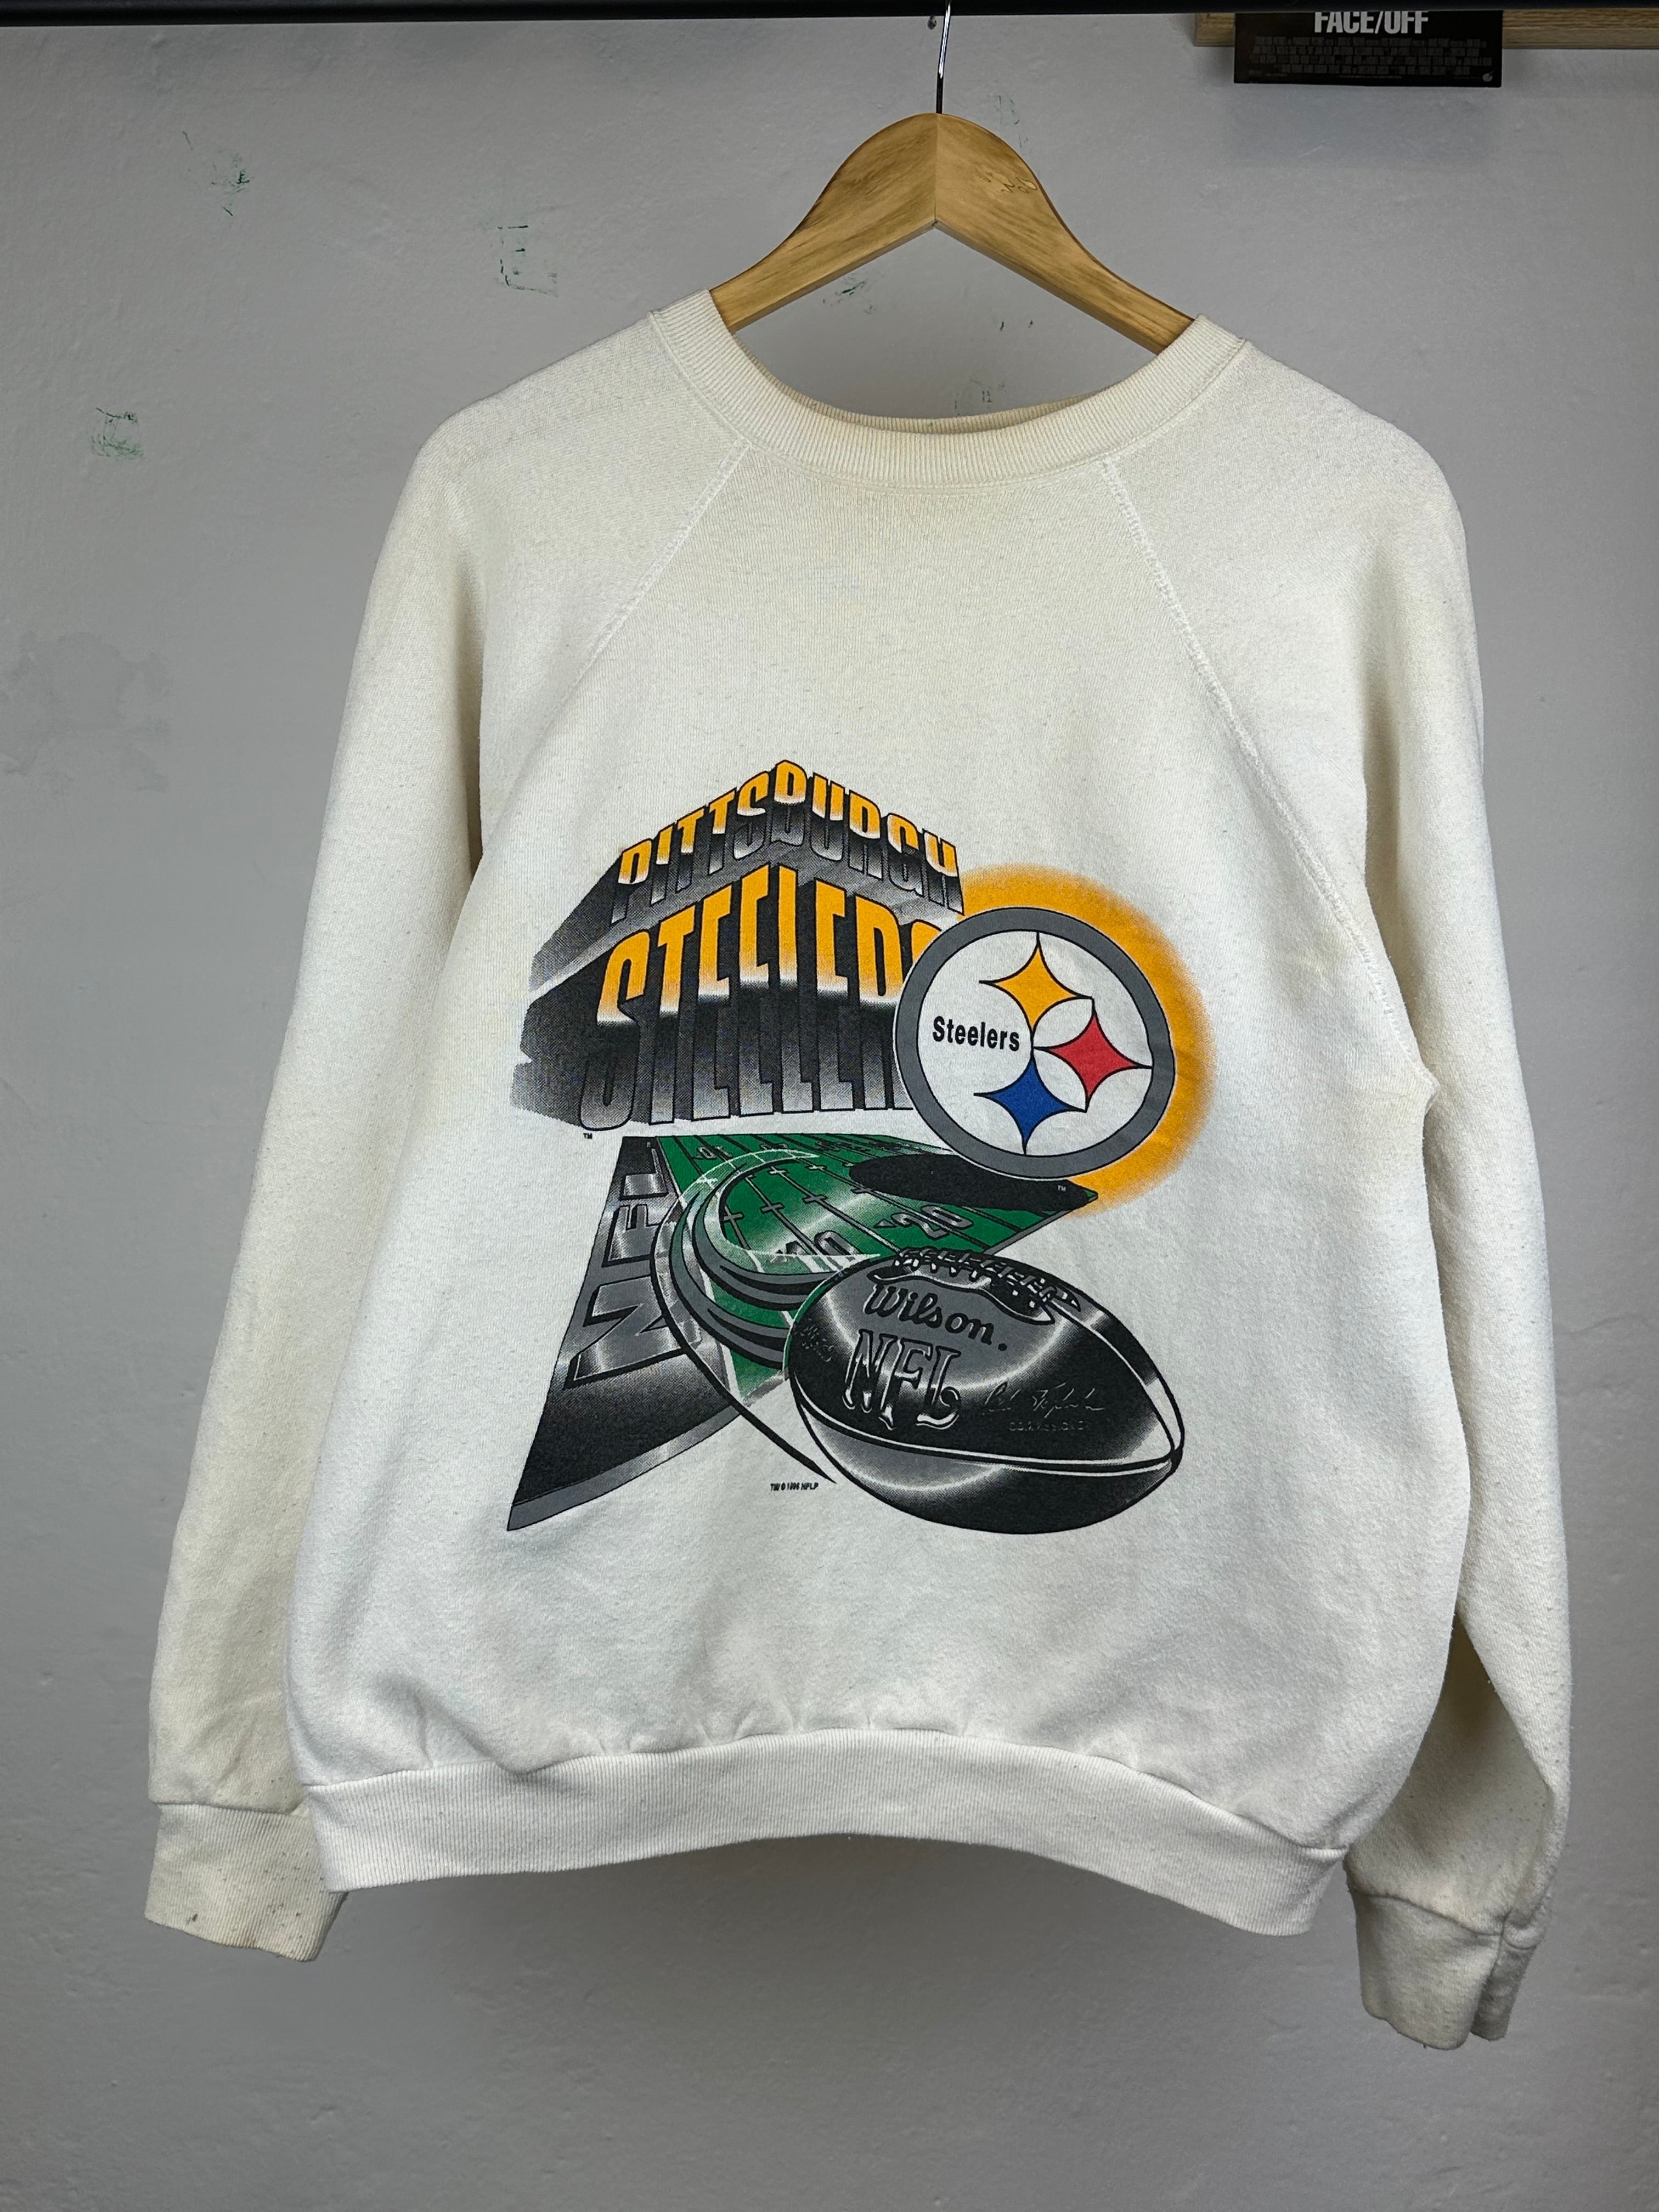 Vintage Steelers 90s crewneck - size L